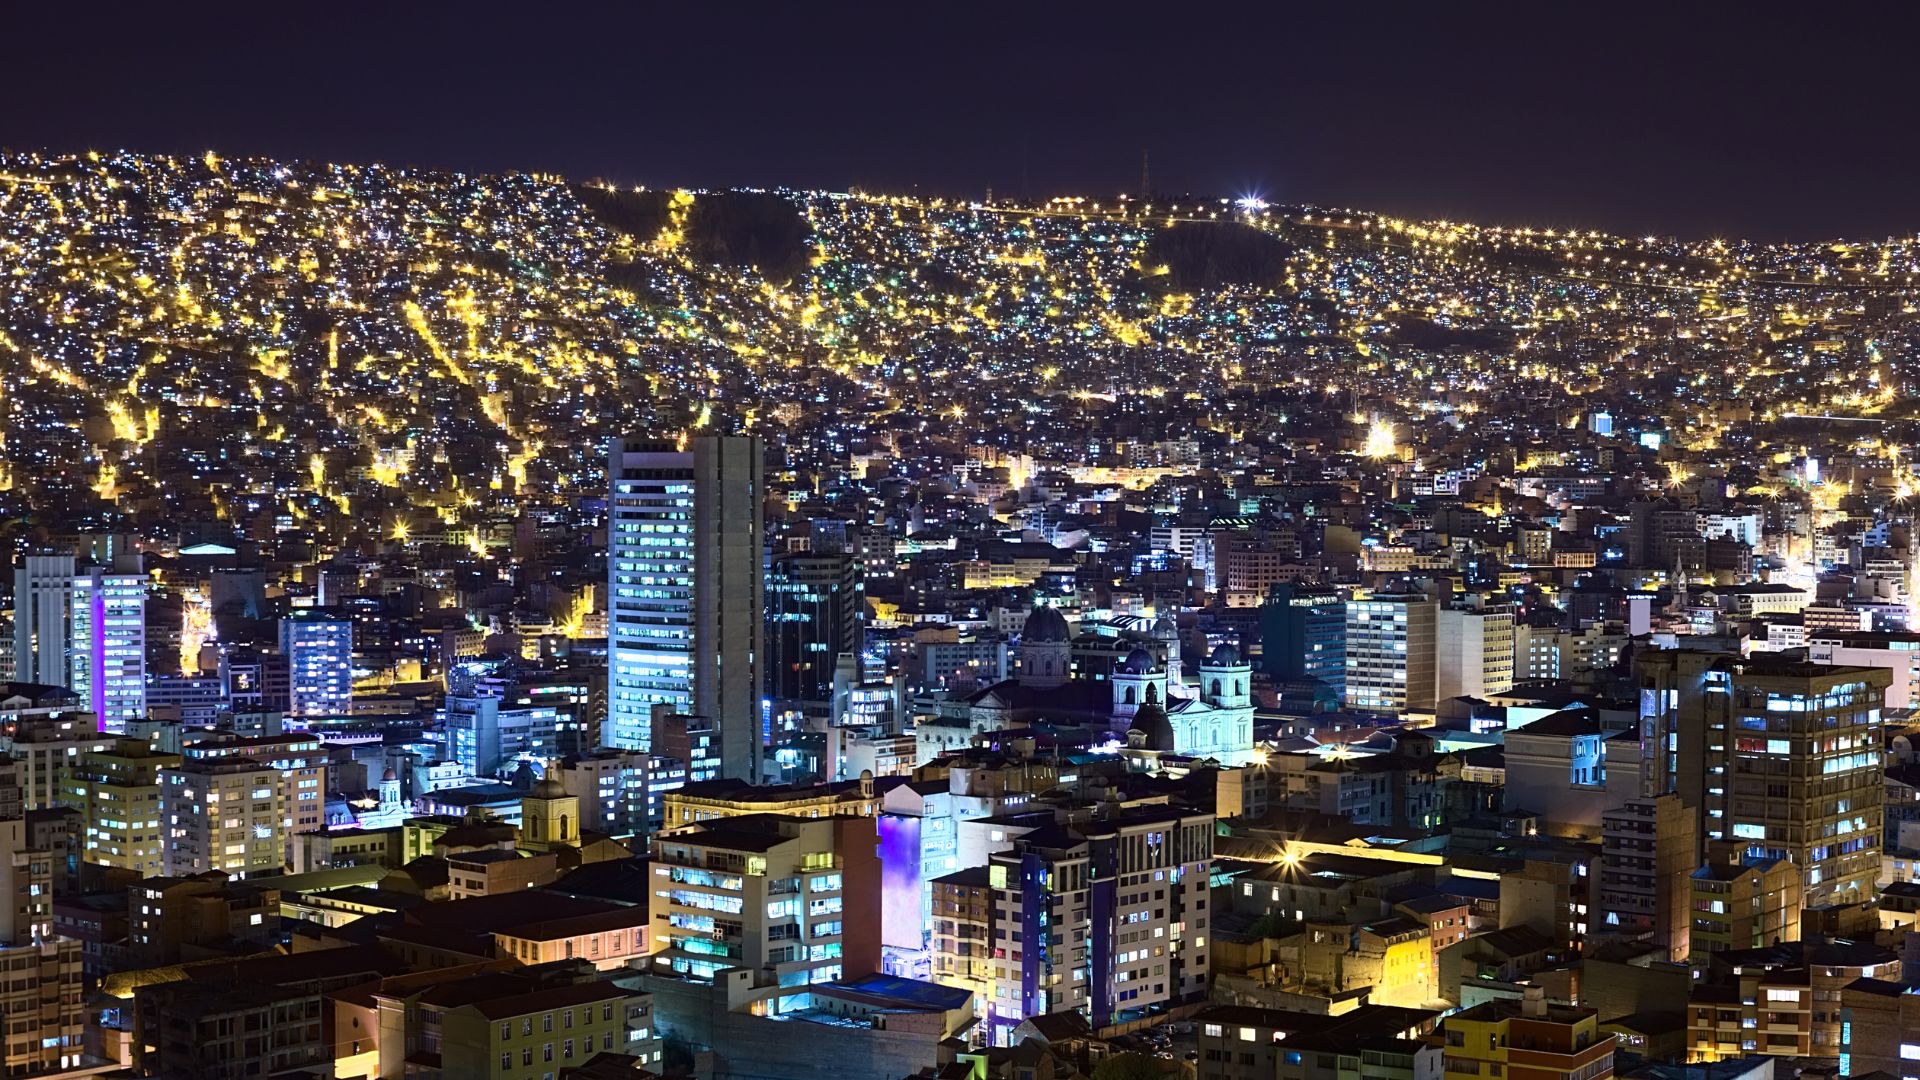 City center of La Paz